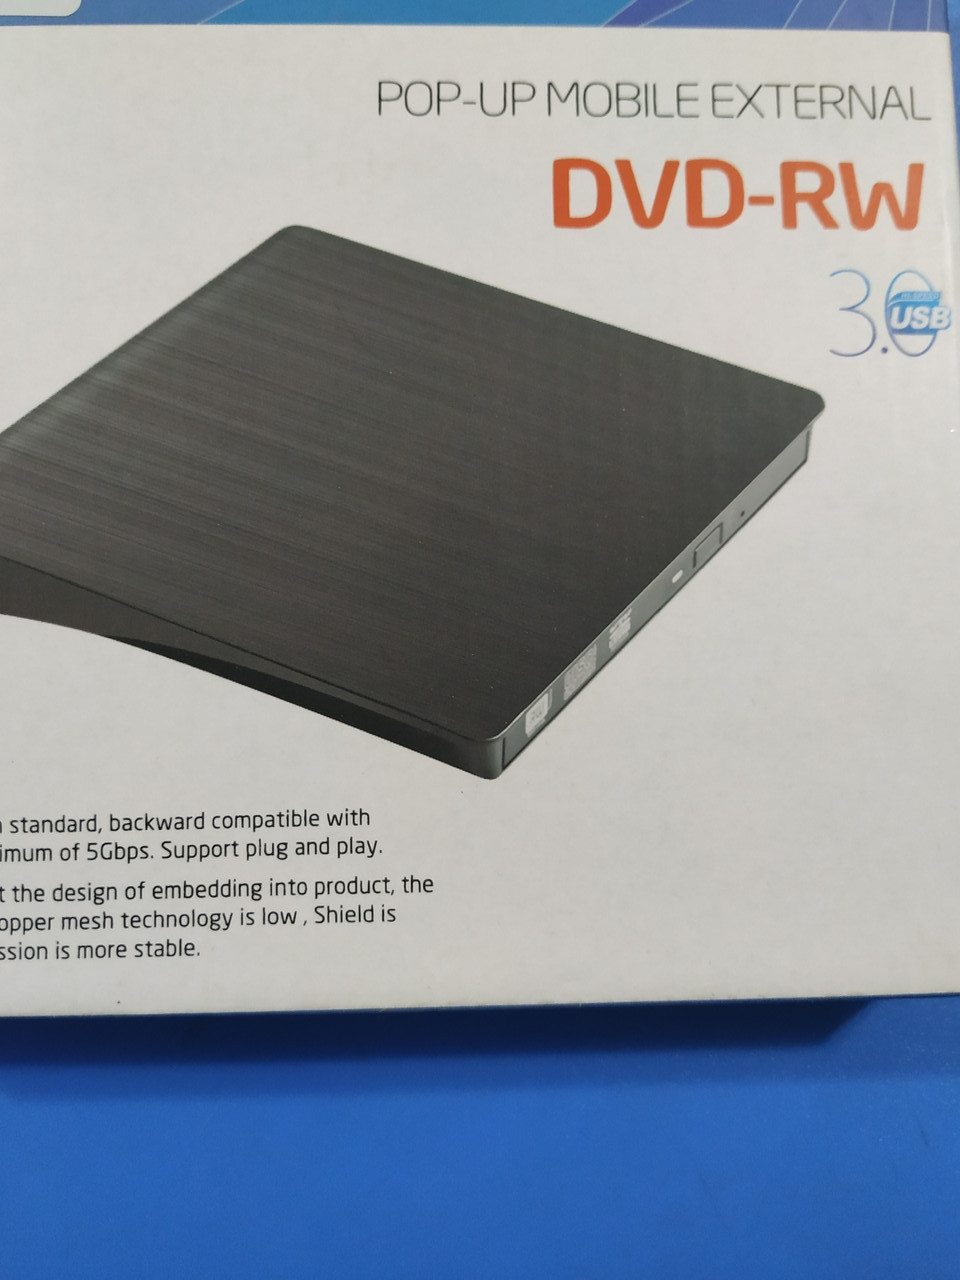 Портативный USB 3.0 Внешний Привод DVD+/CD для ноутбука ПК